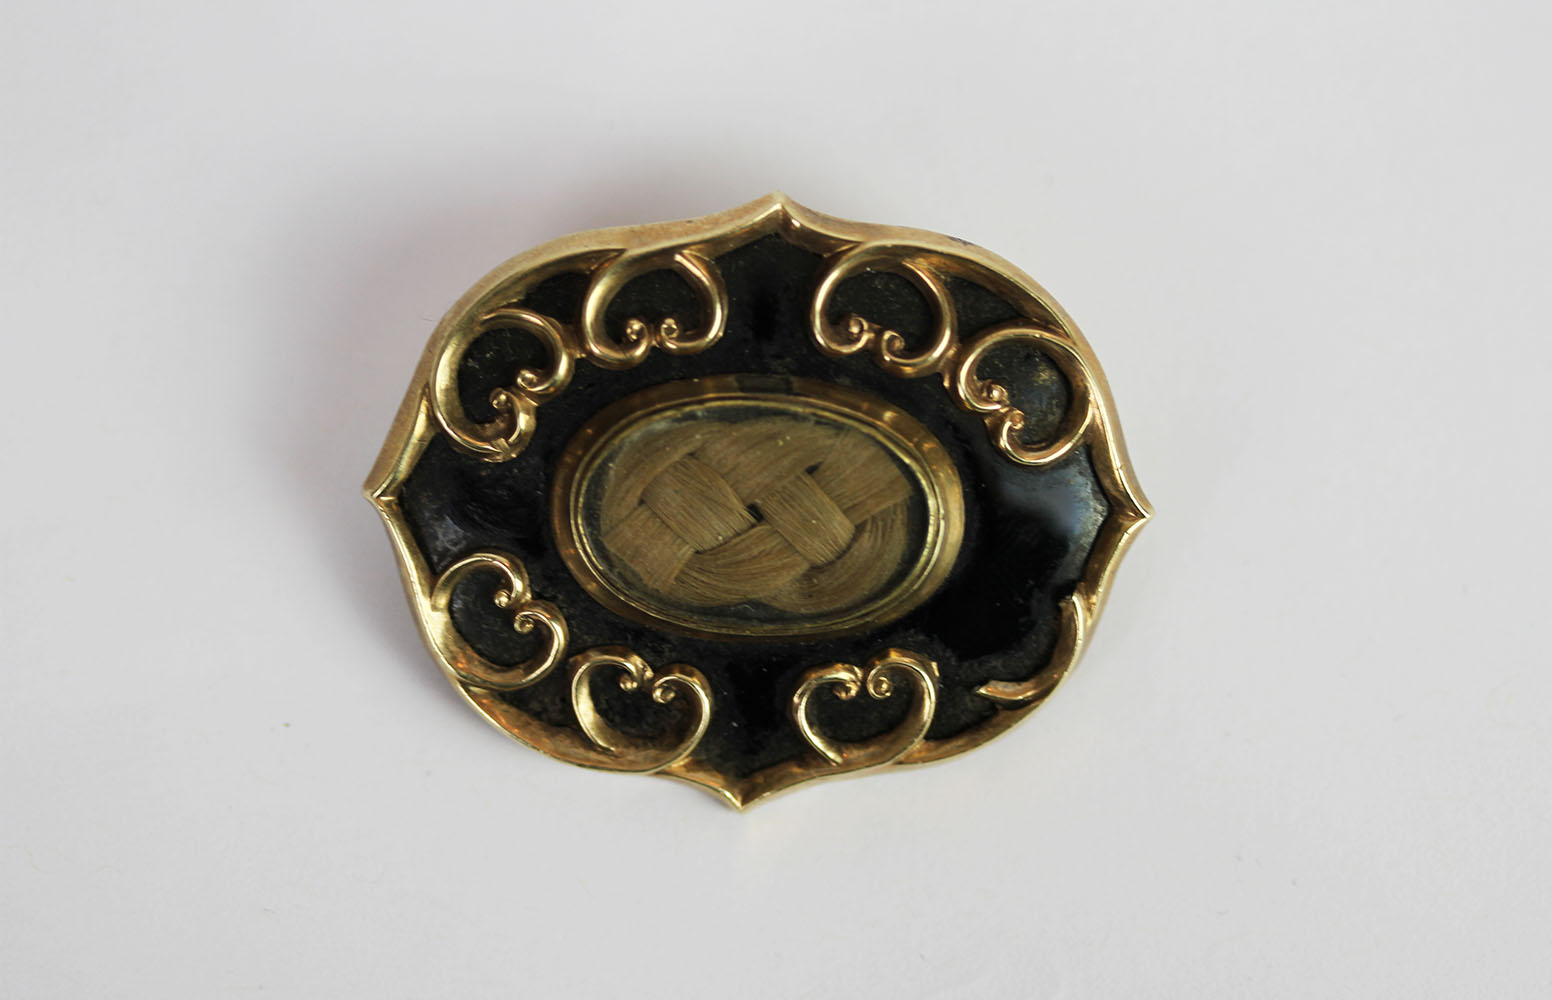 Victorian black enamel mounting locket, central hair display, black enamel border with gold